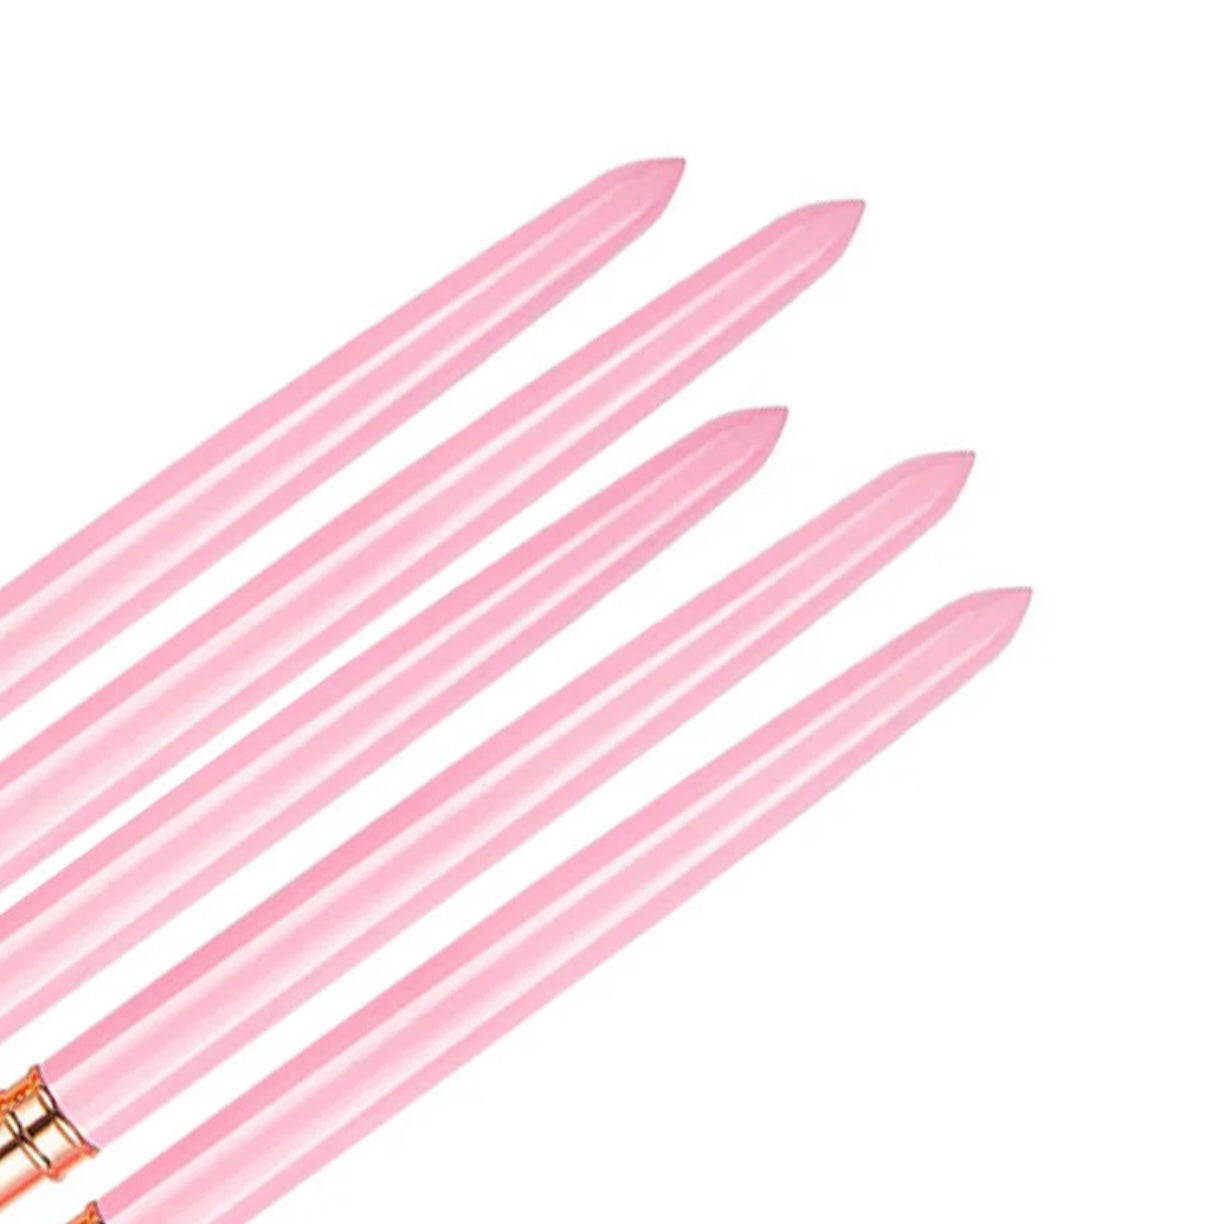 Pink Nail Art Brush - 11mm